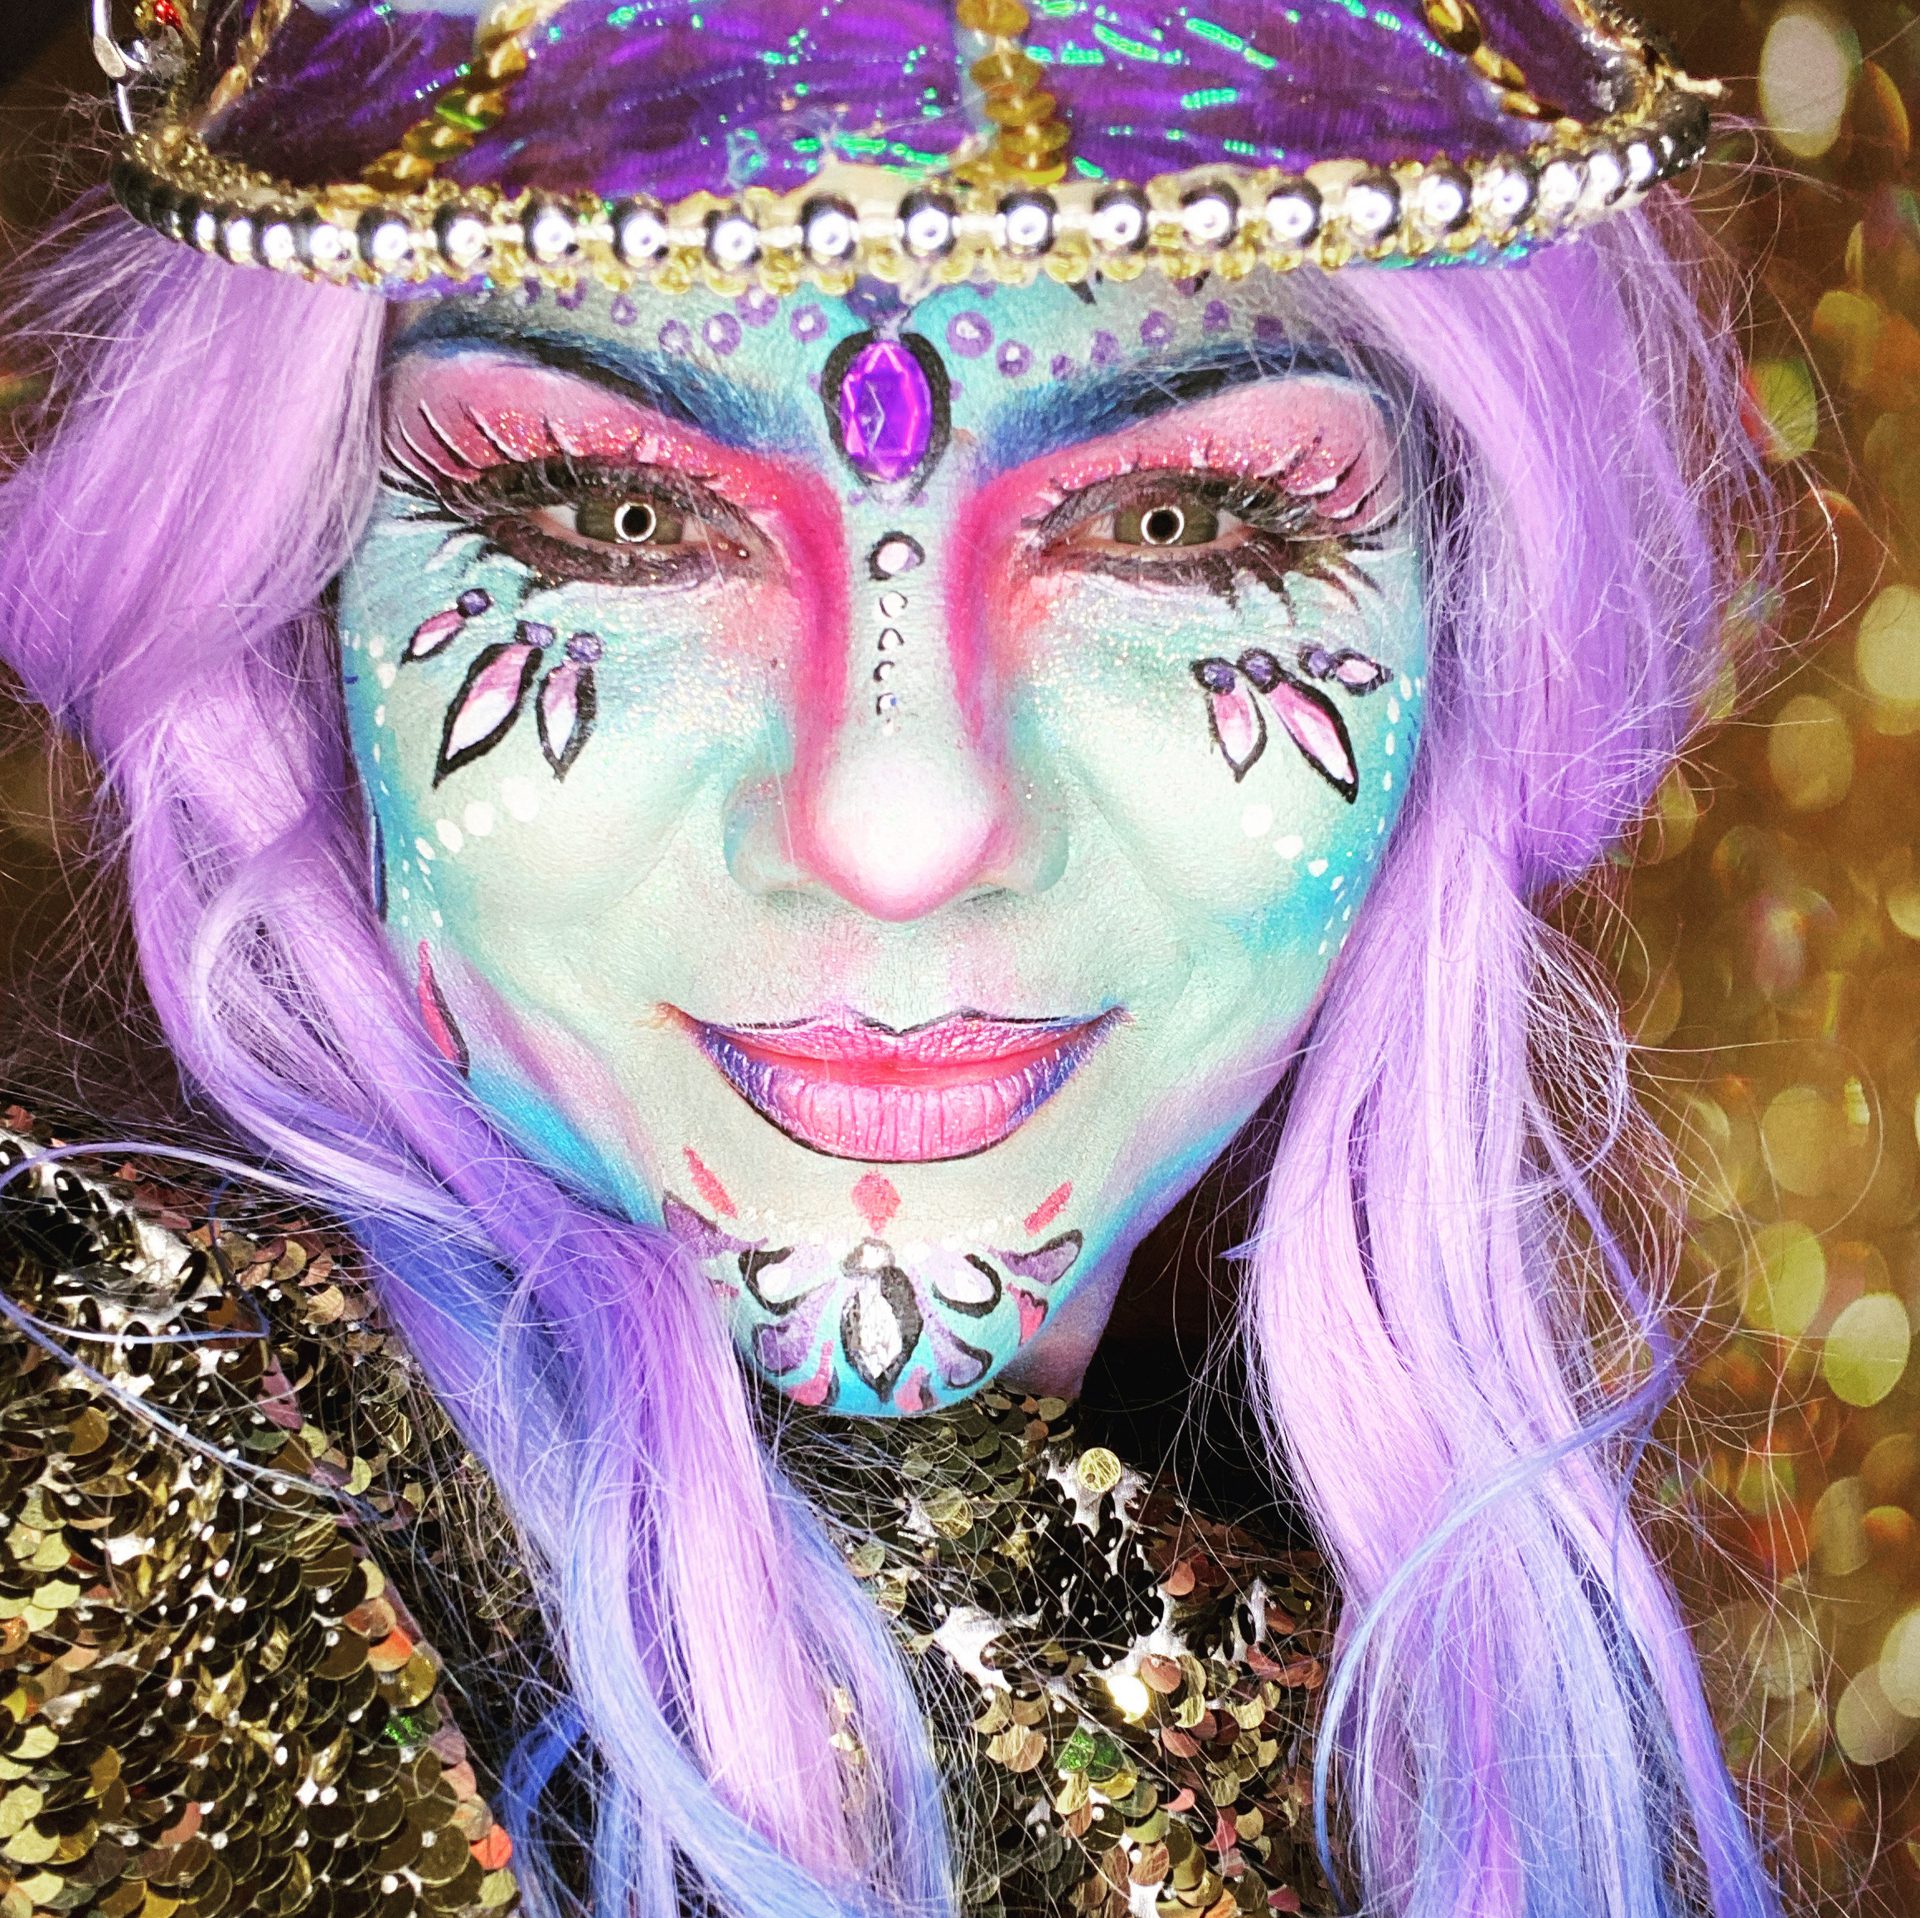 glittercap carnaval vastelaovend facepaint bellypaint workshop halloween schmink